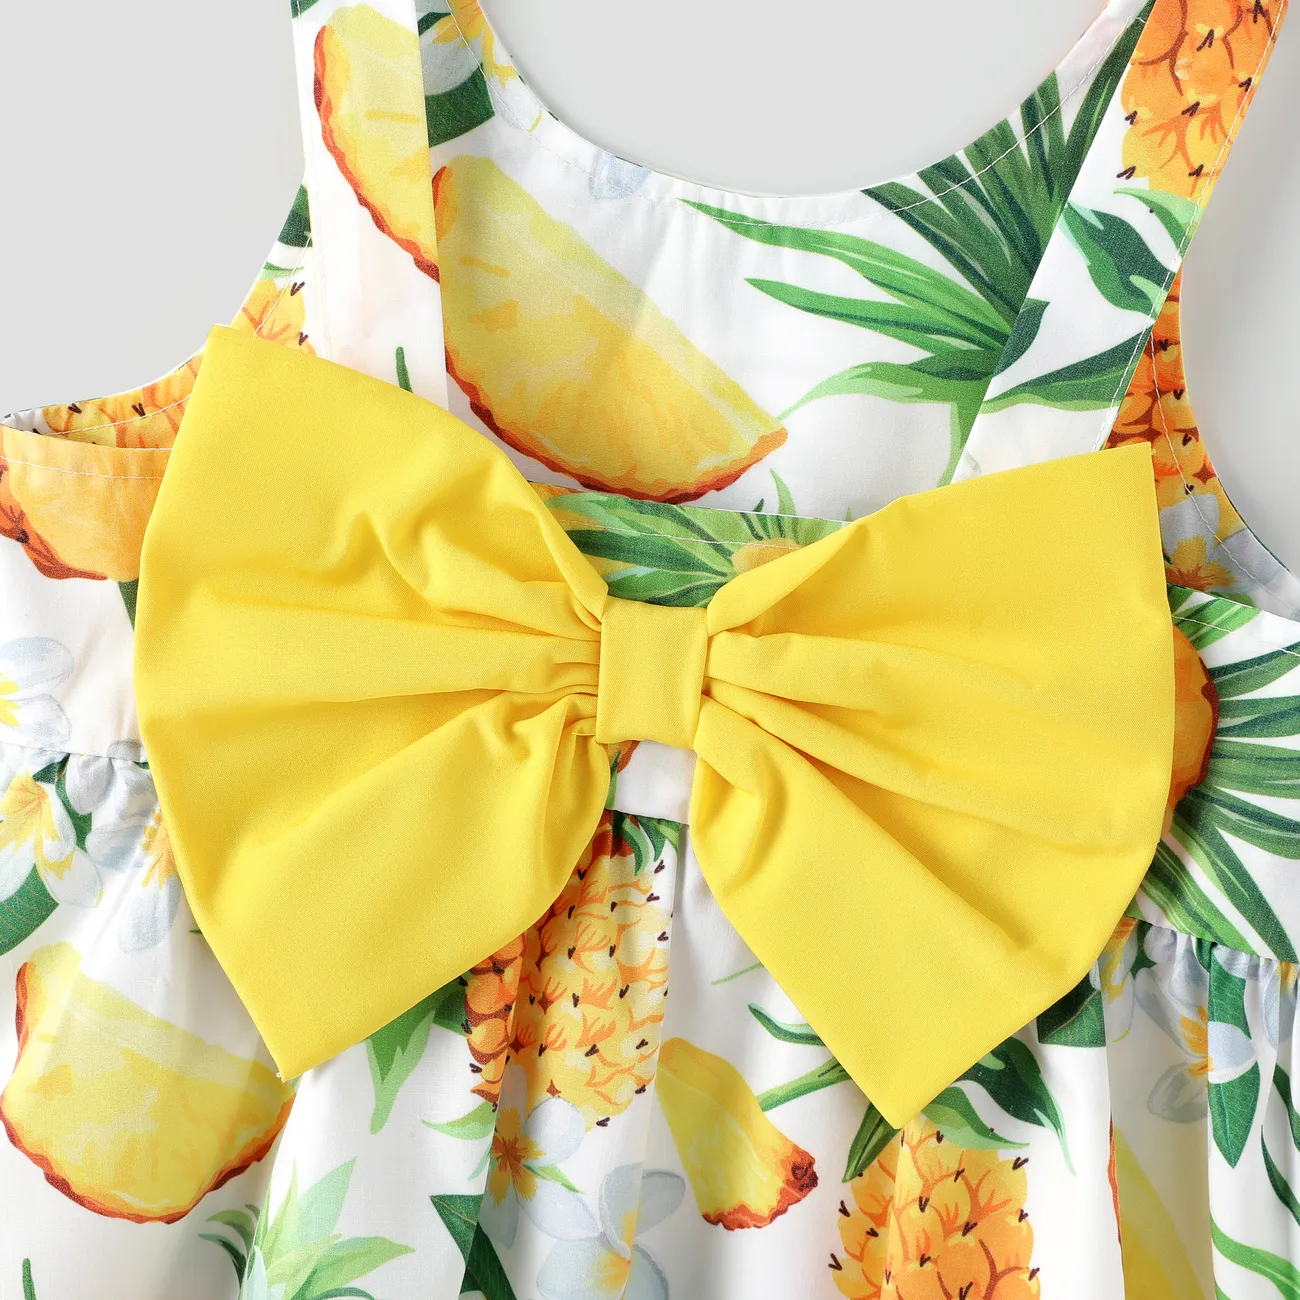 Toddler Girl 2pcs Pineapple Print Sleeveless Dress with Hat Set Multicolour-1 big image 1